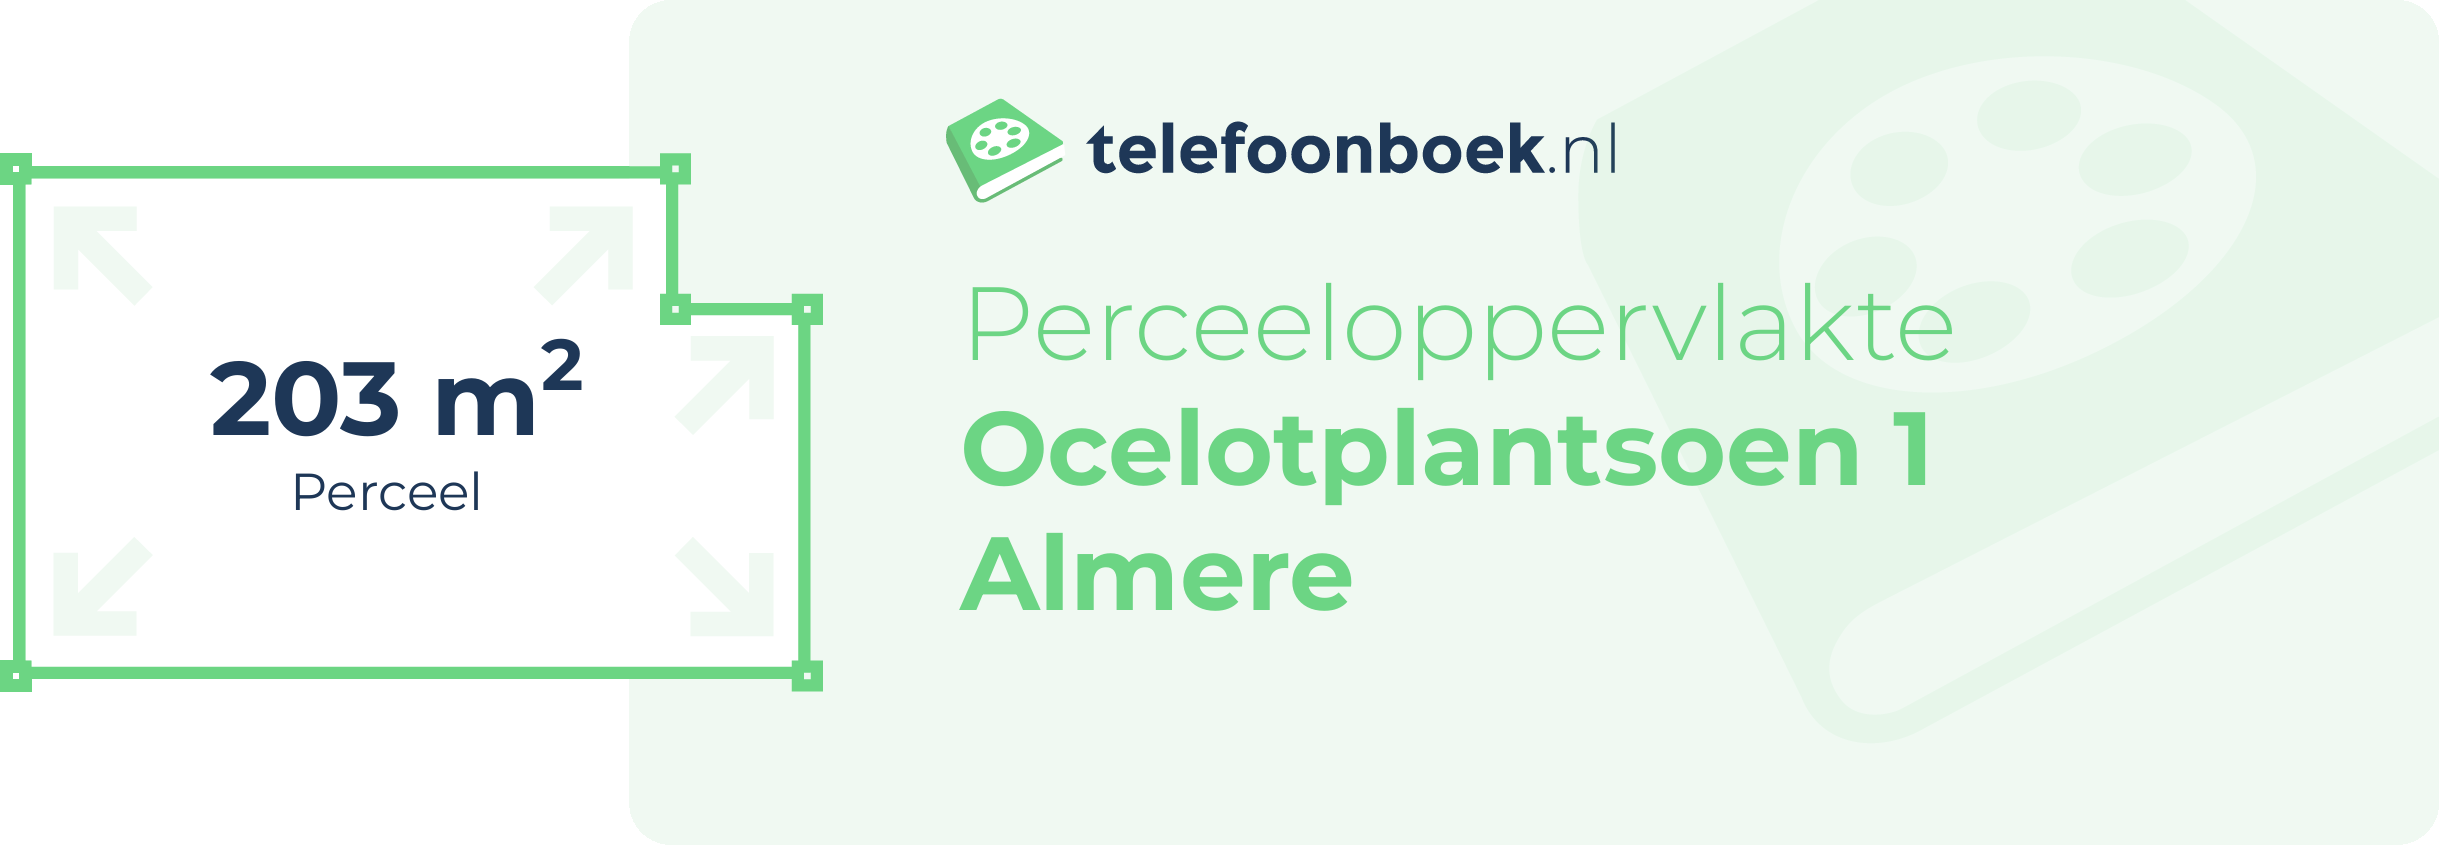 Perceeloppervlakte Ocelotplantsoen 1 Almere